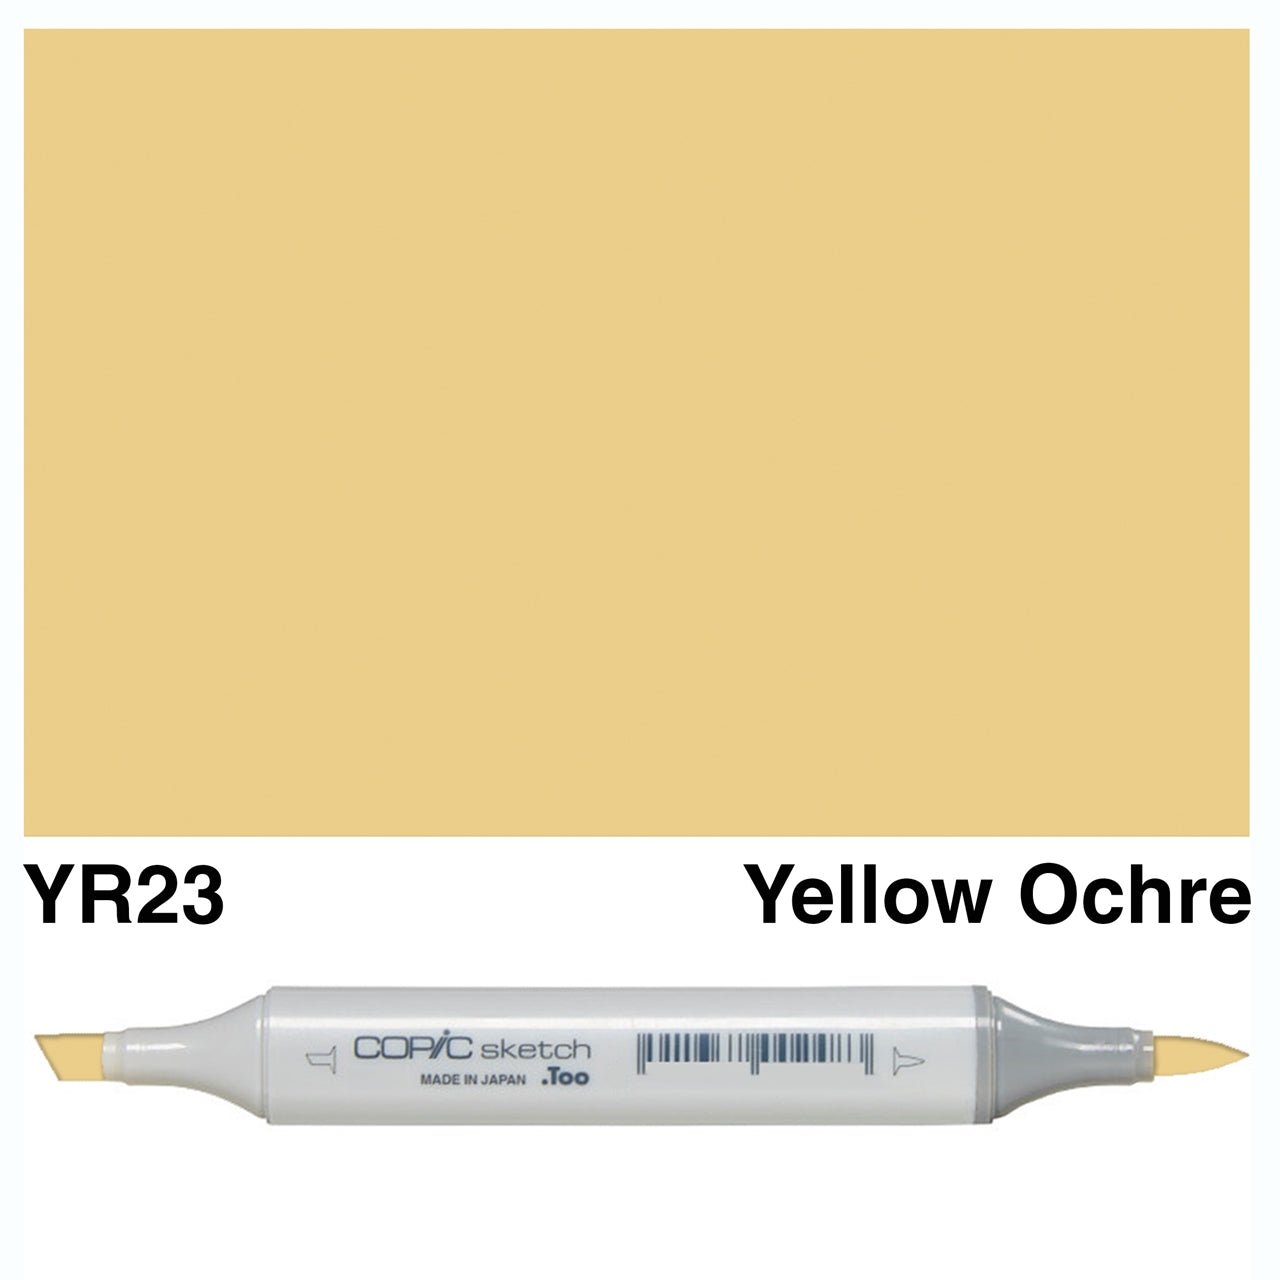 Copic Sketch YR23 Yellow Ochre - theartshop.com.au